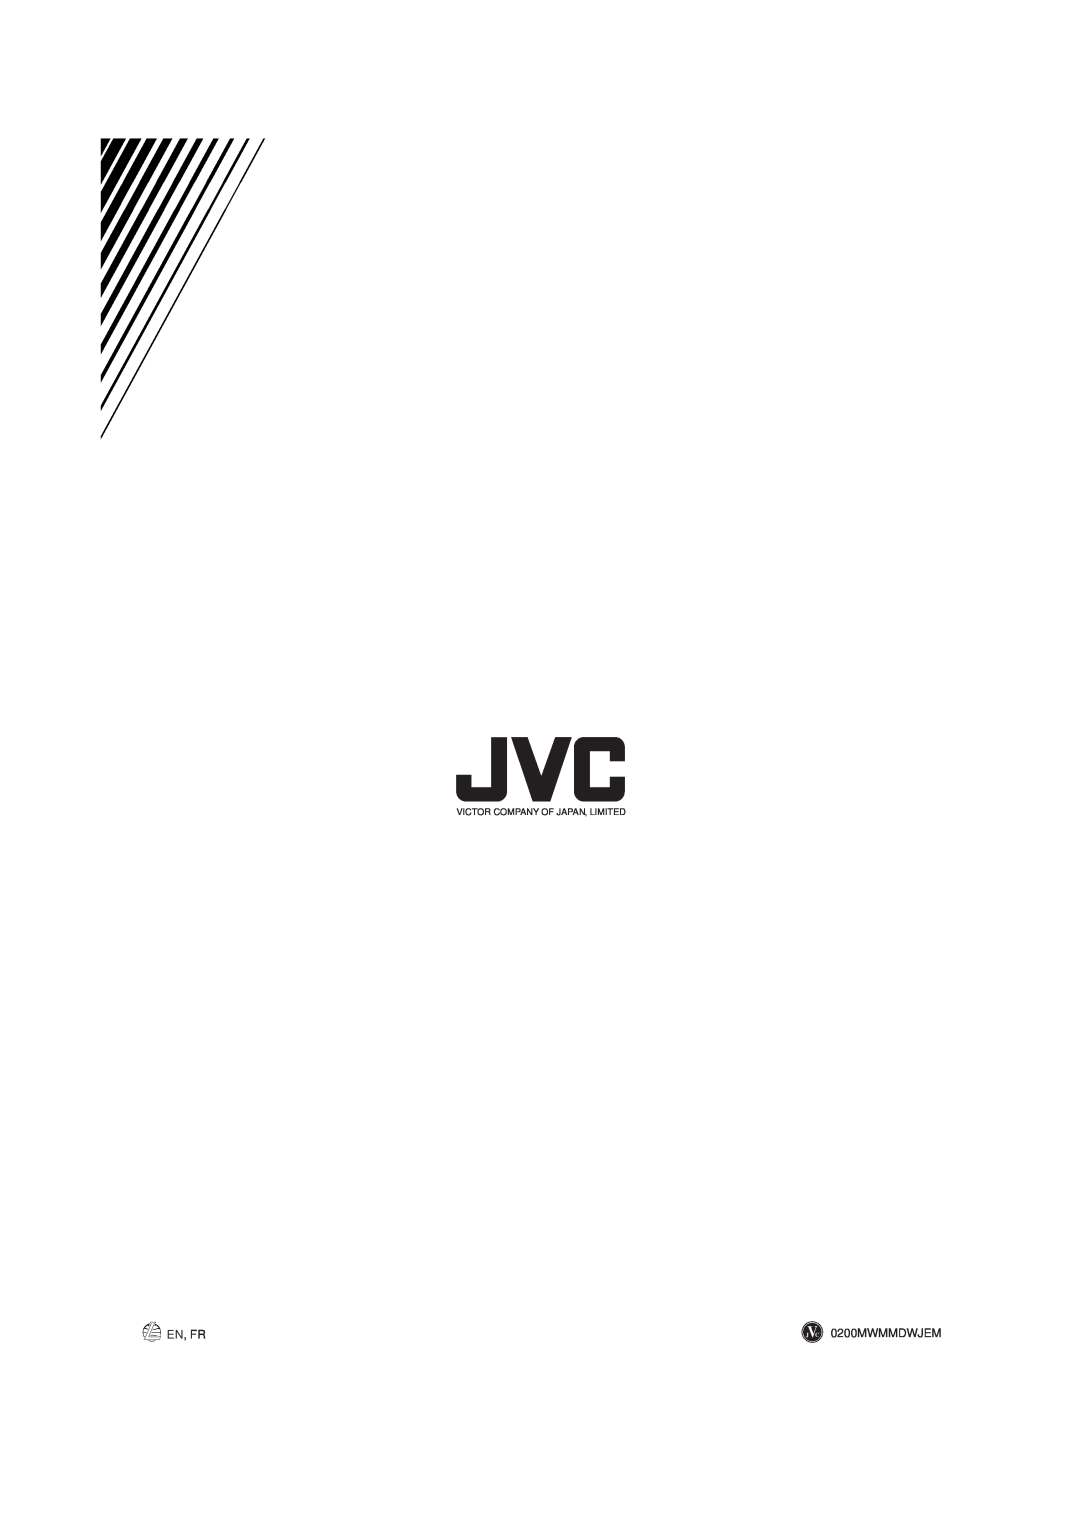 JVC MX-J500 manual En, Fr, 0200MWMMDWJEM, Victor Company Of Japan, Limited 